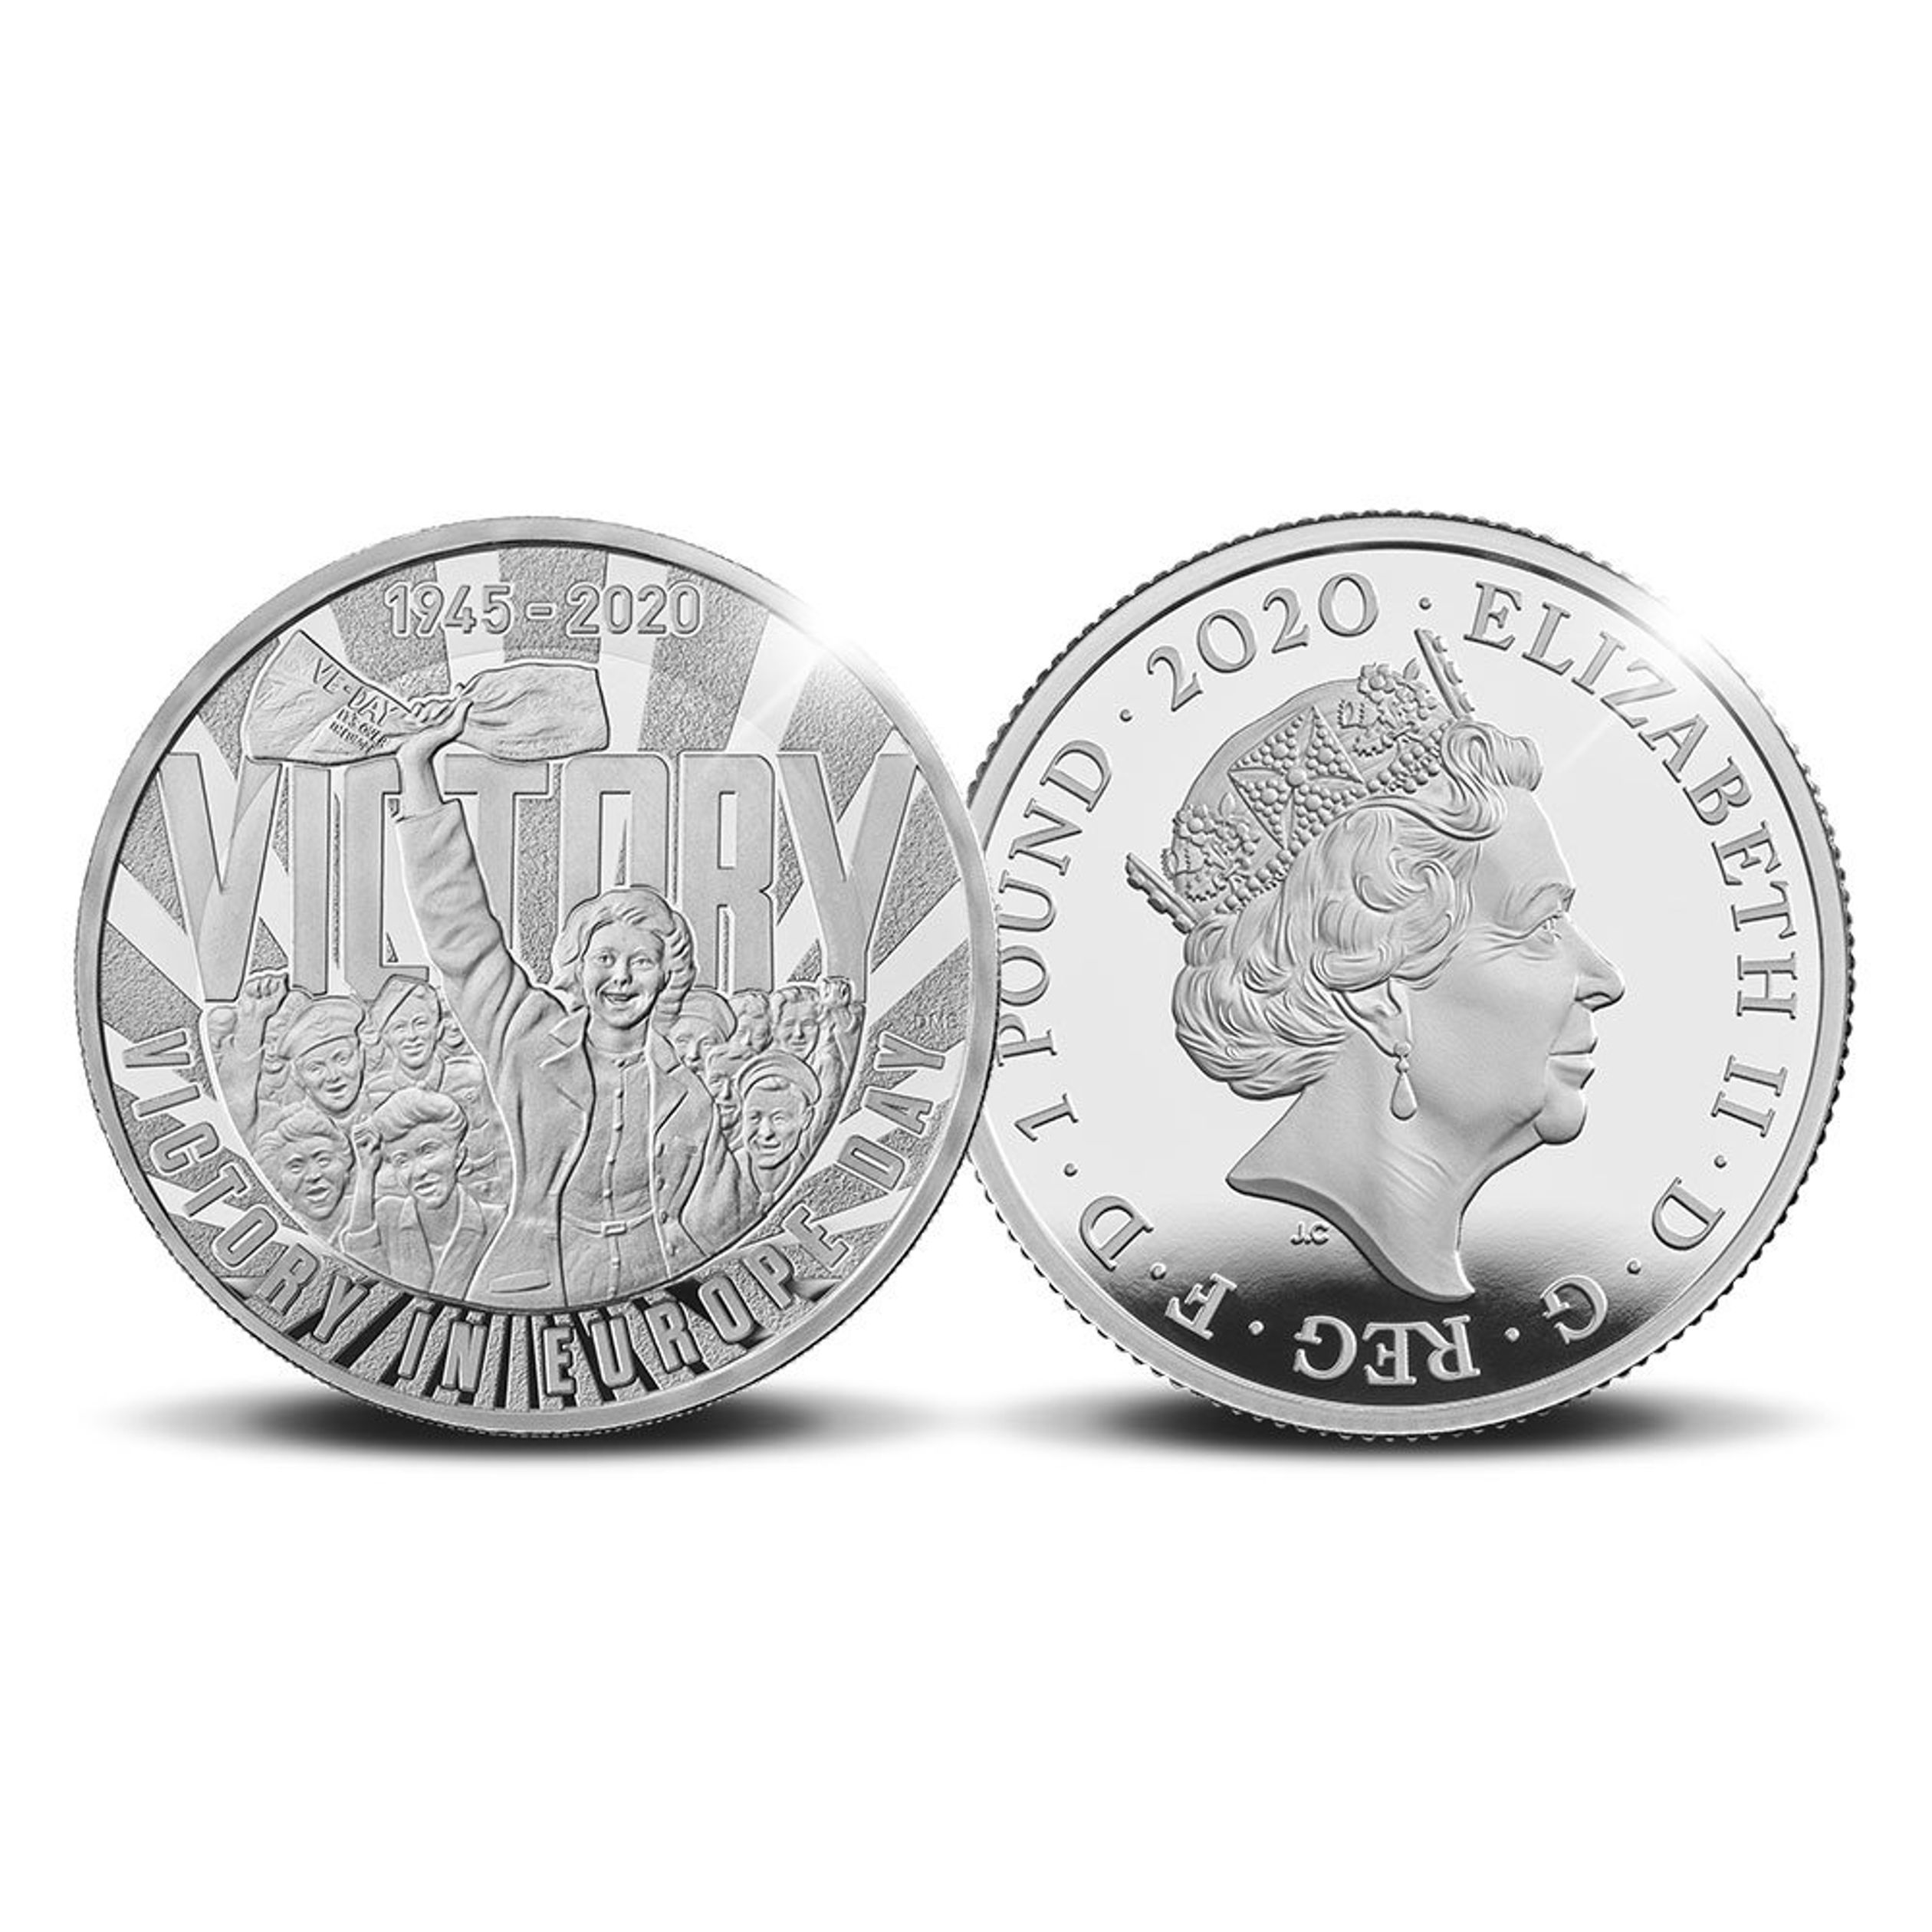 De Engelse munt met koningin Elizabeth erop.